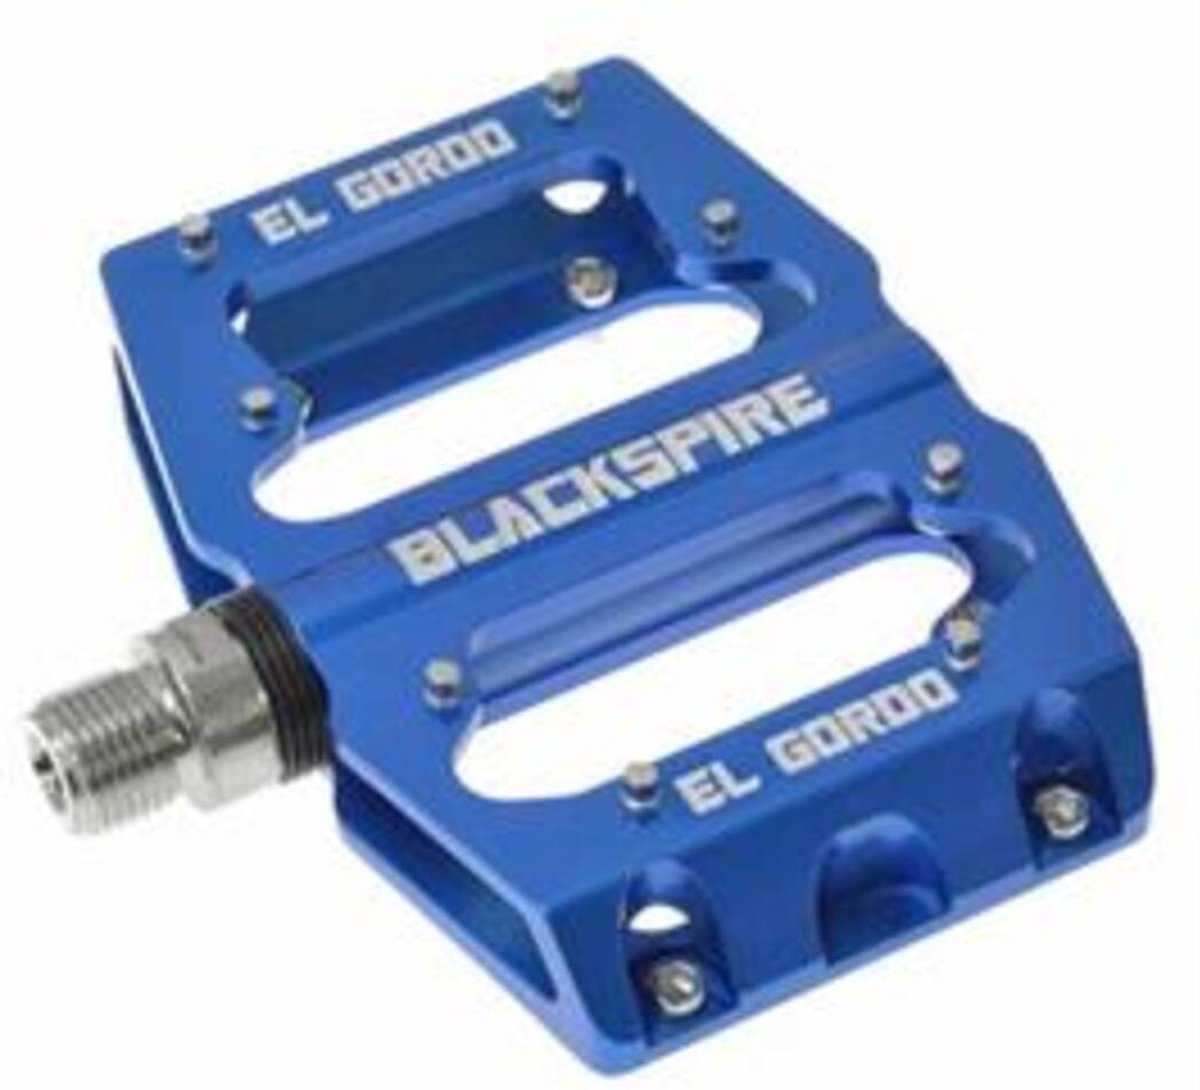 Blackspire - elgordo cnc pedaal inclusief vervangbare pennen blauw